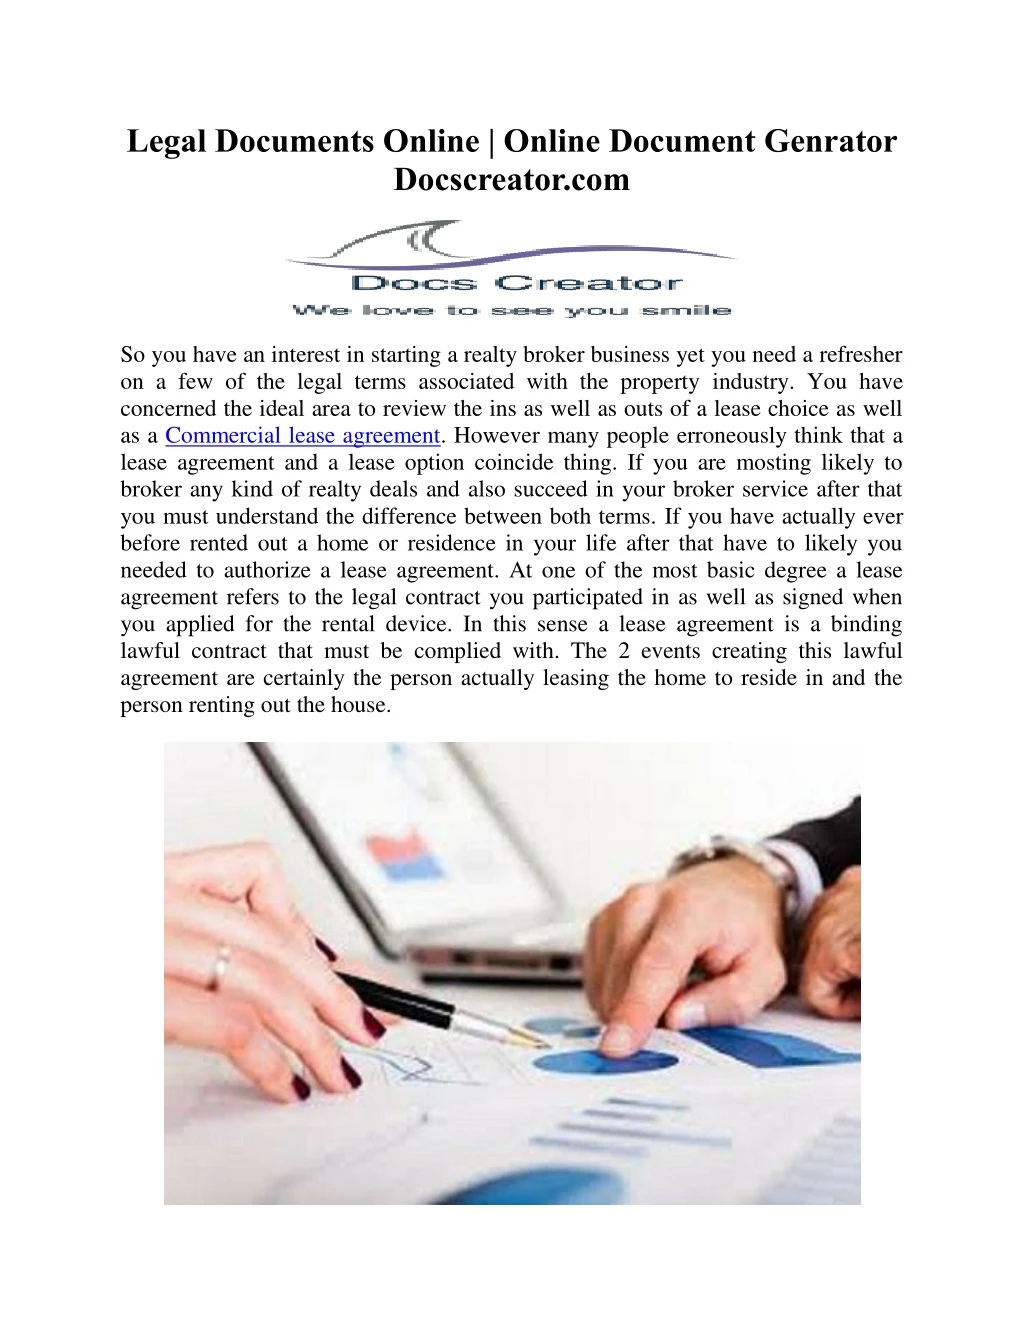 legal documents online online document genrator